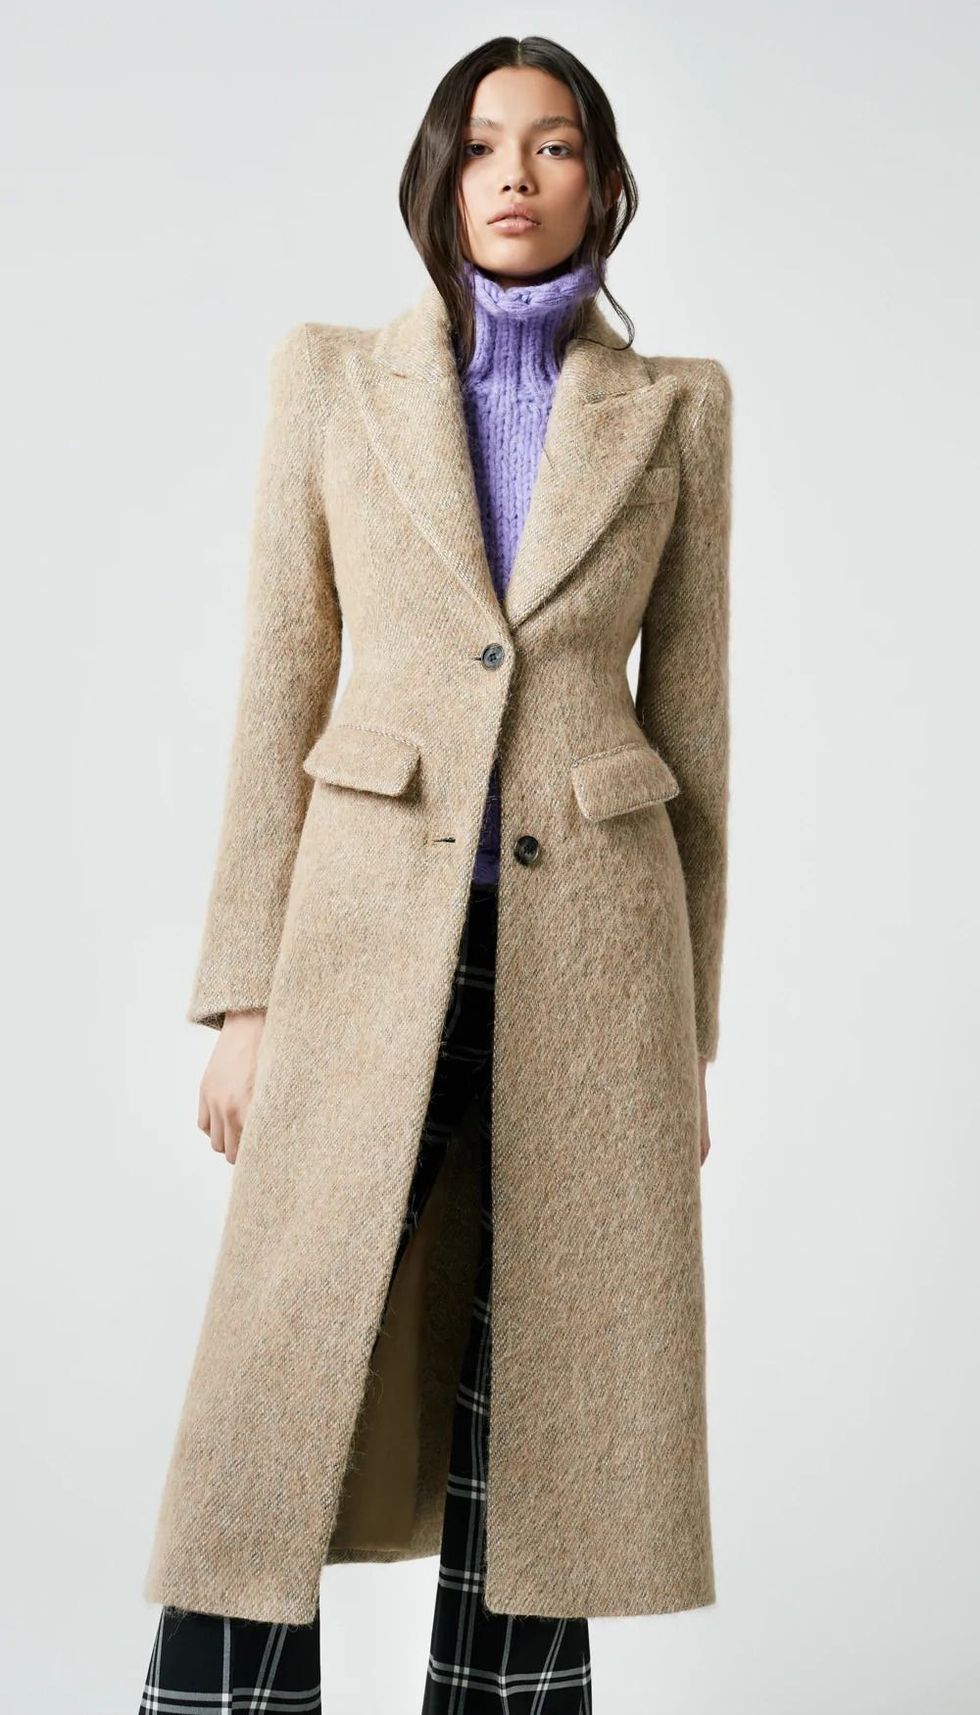 Camel Max Mara Studio coat outfit — Covet & Acquire